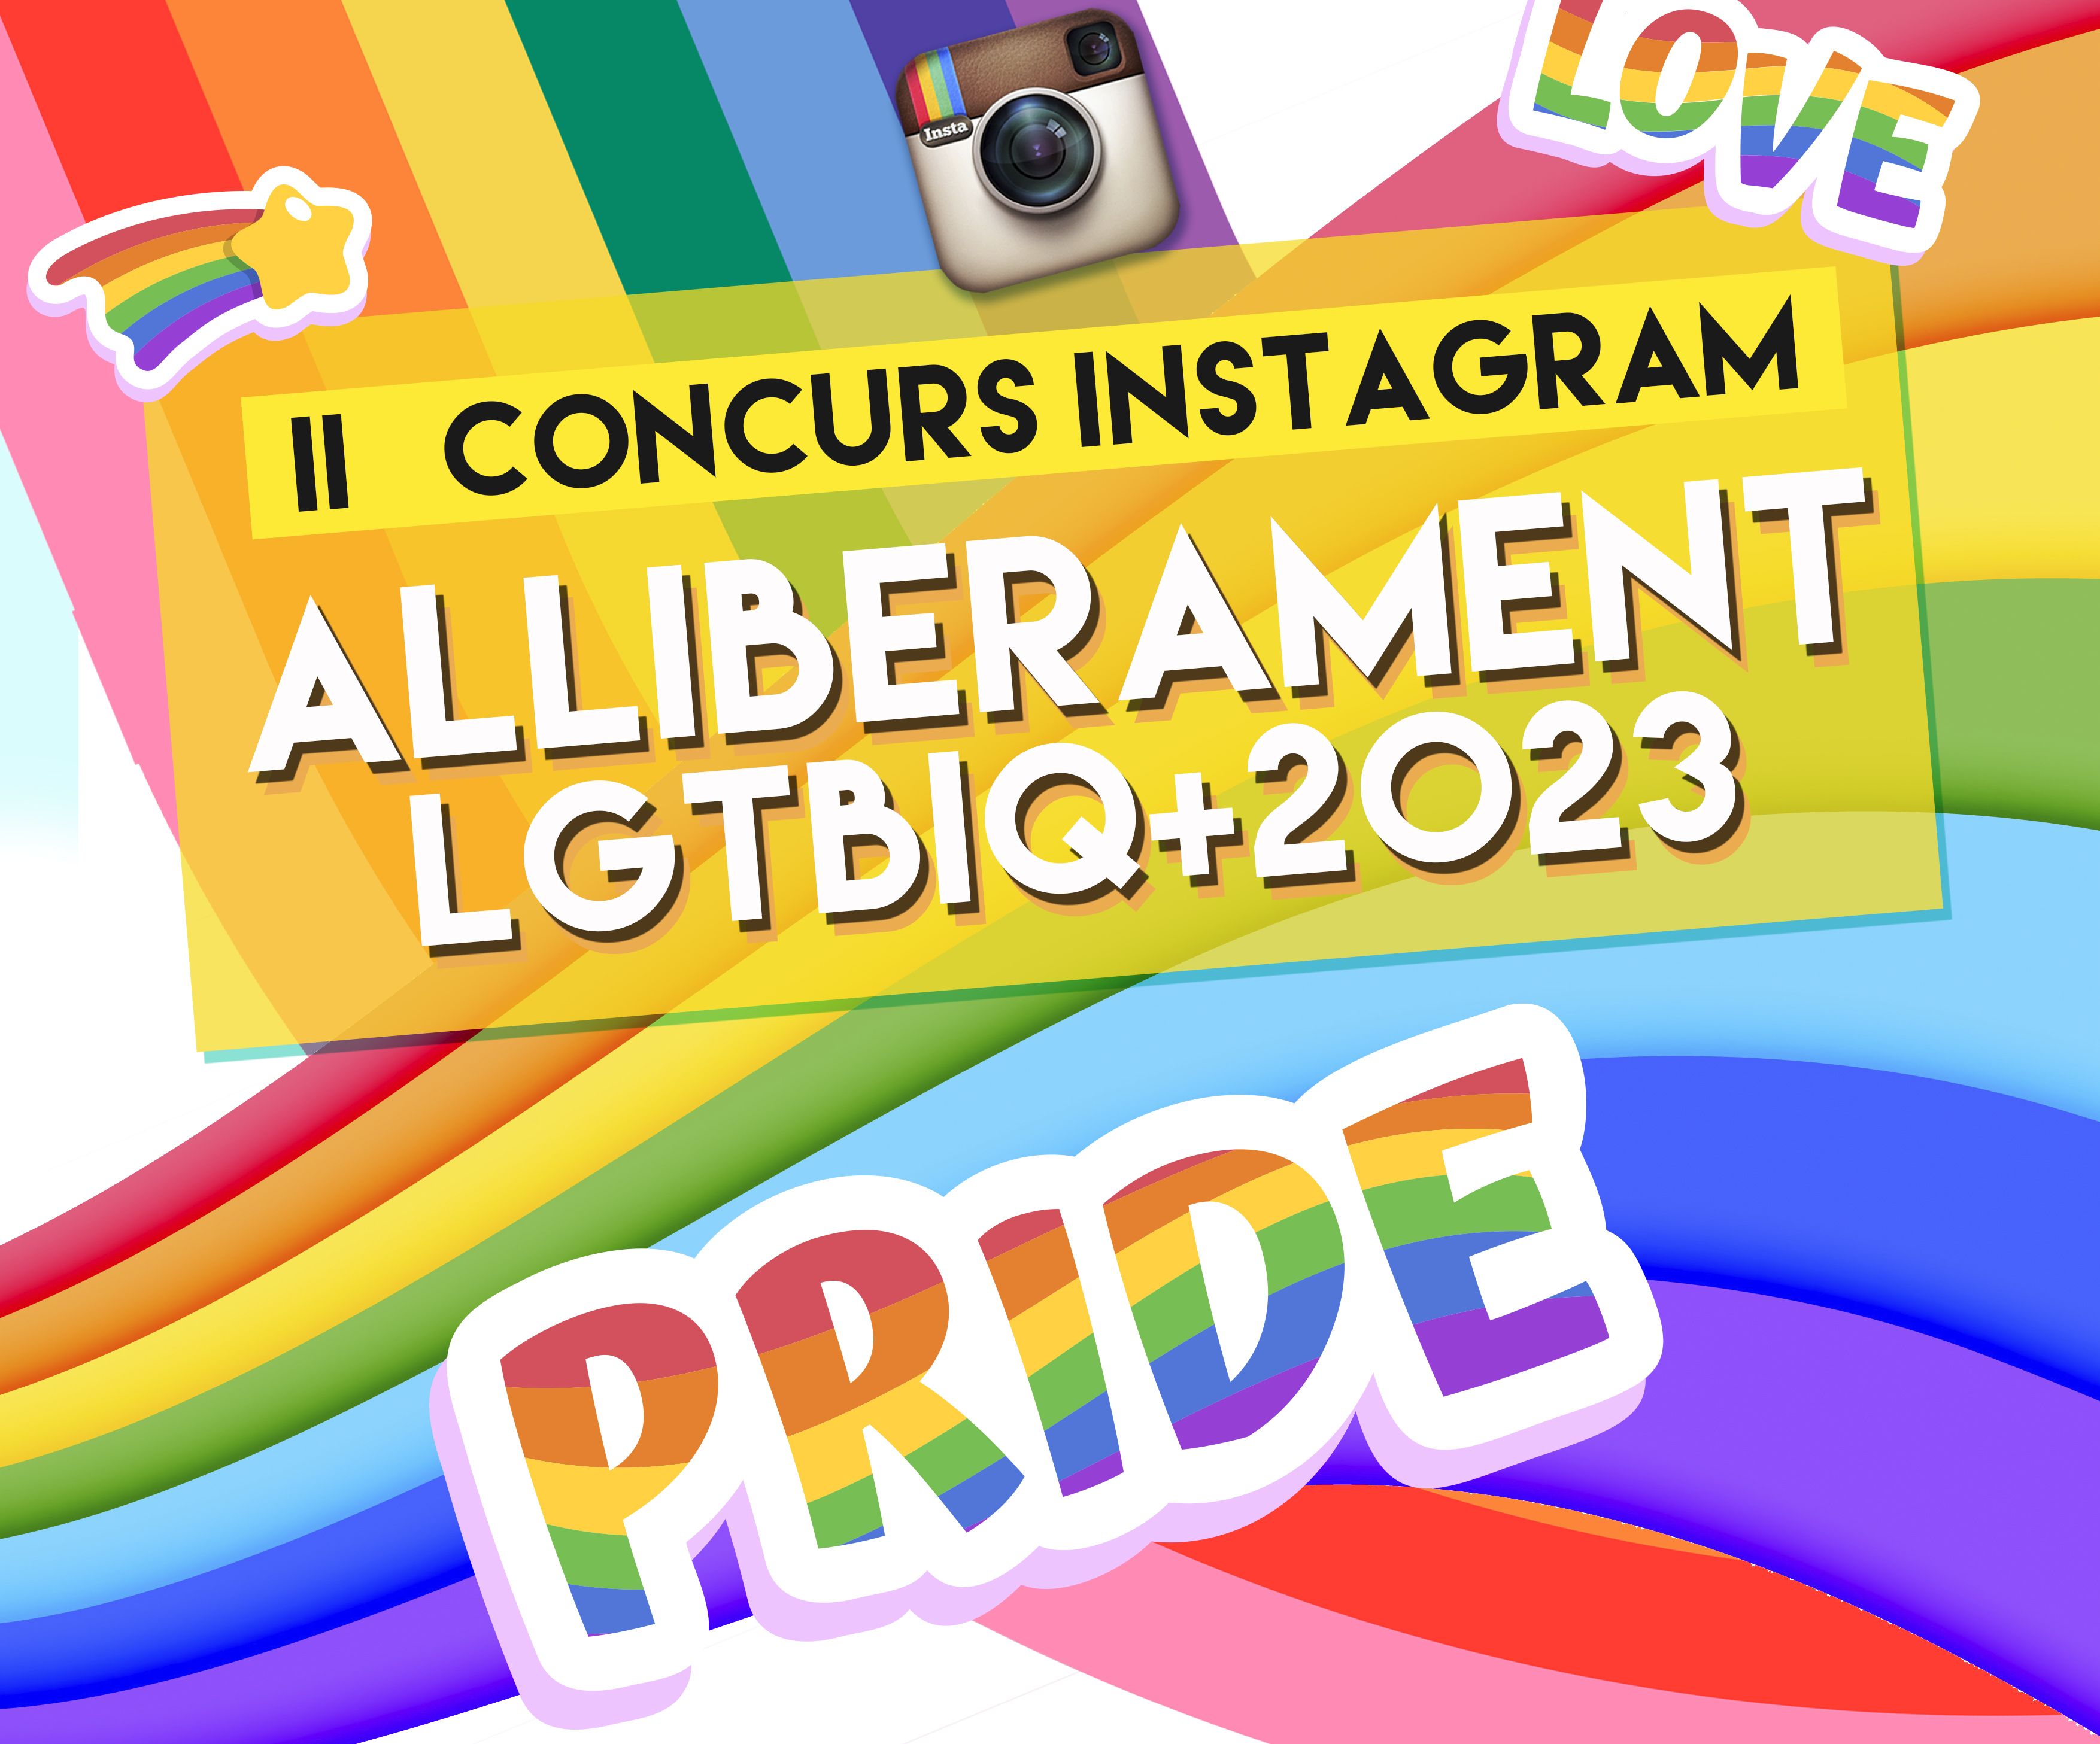 Concurs Instagram LGTBIQ 2023